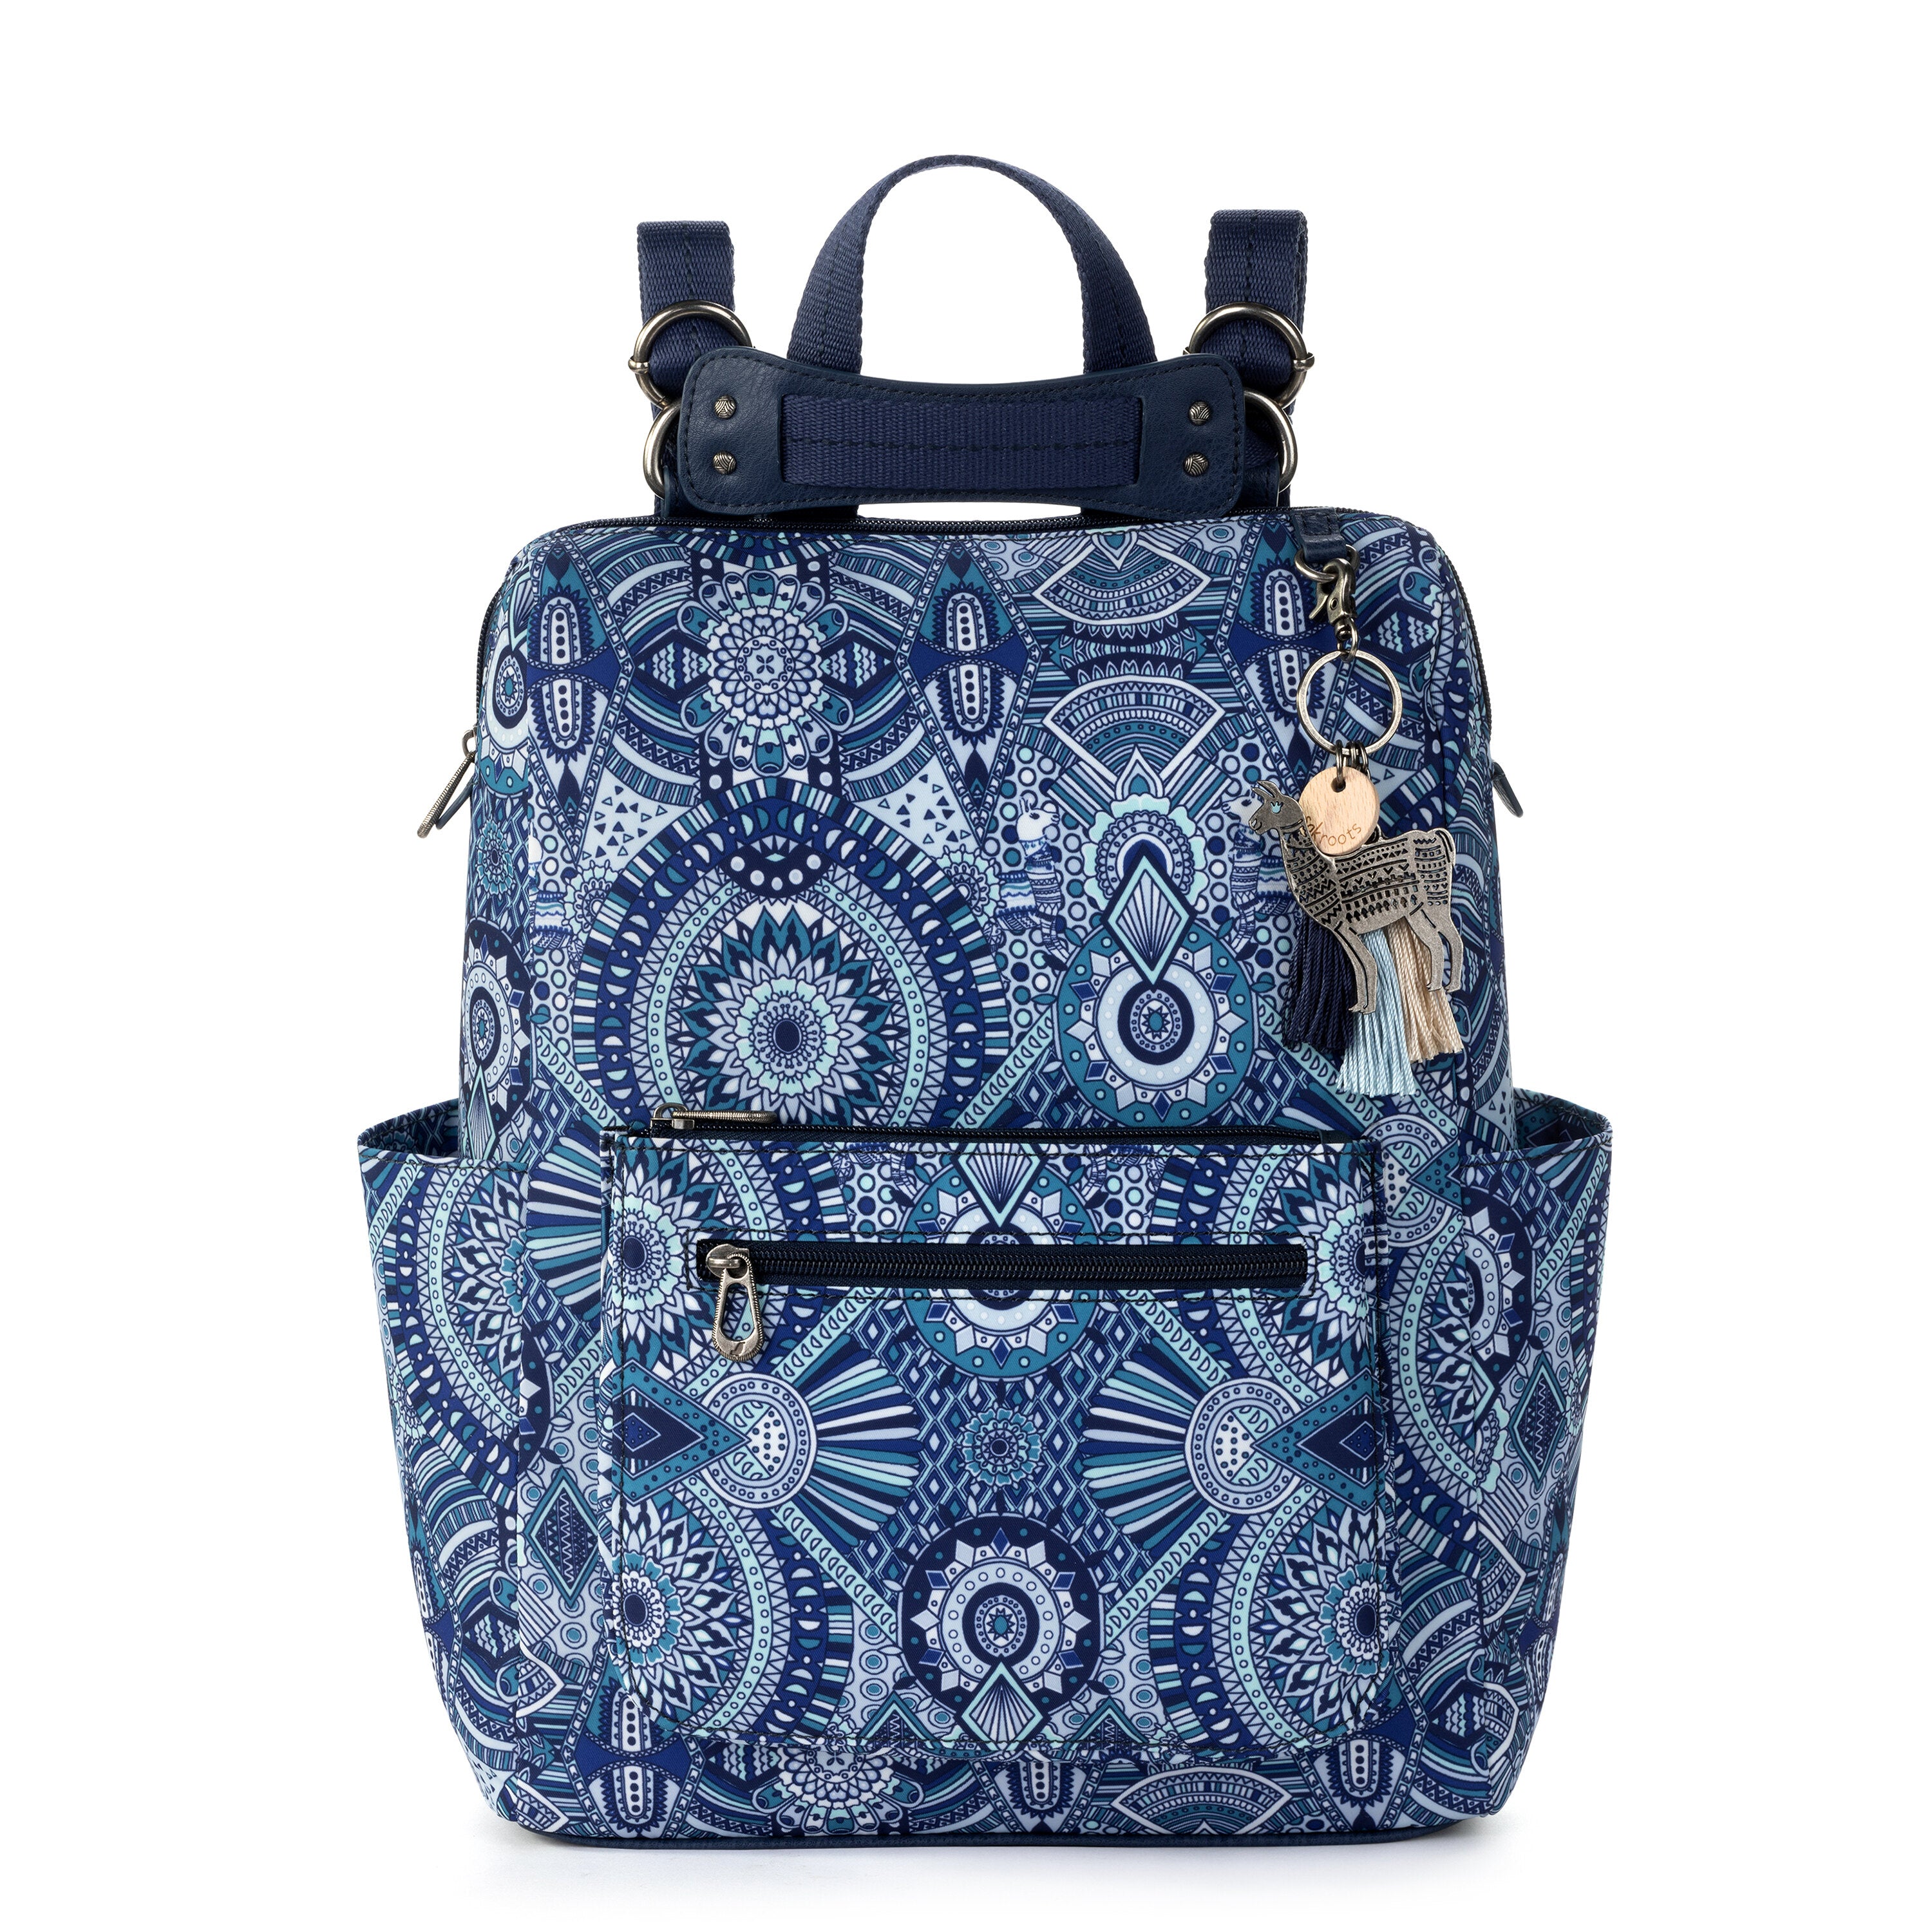 Convertible Bags | Versatile Handbags for Adaptive Style – The Sak